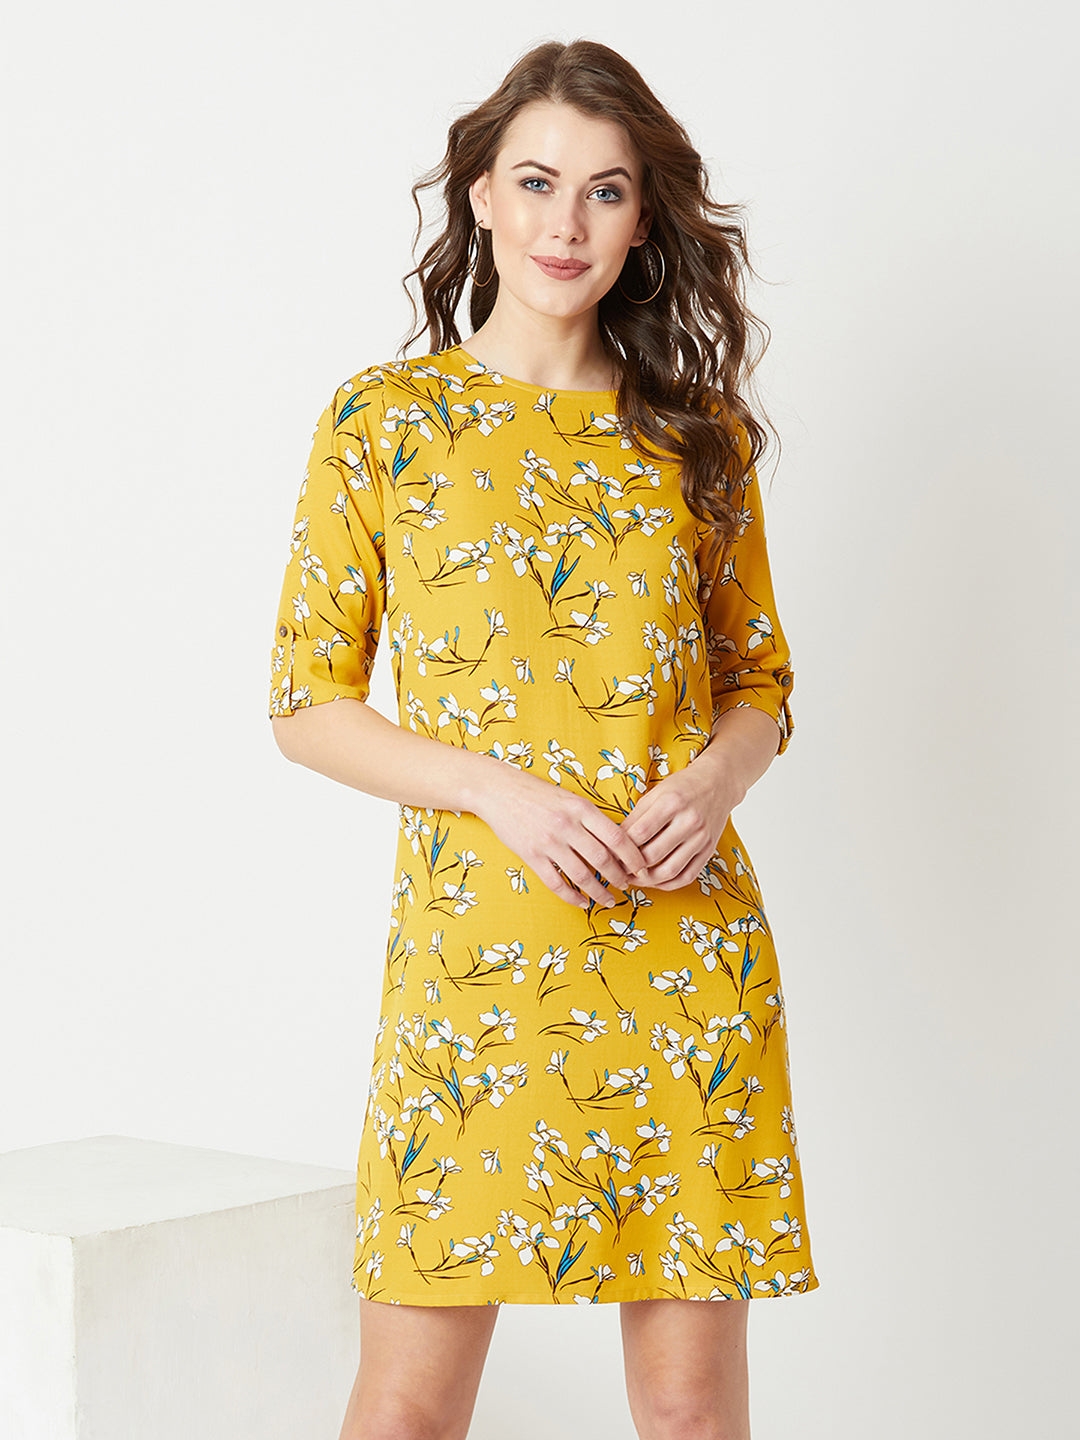 MISS CHASE | Women's Yellow Crepe Casualwear Shift Dress